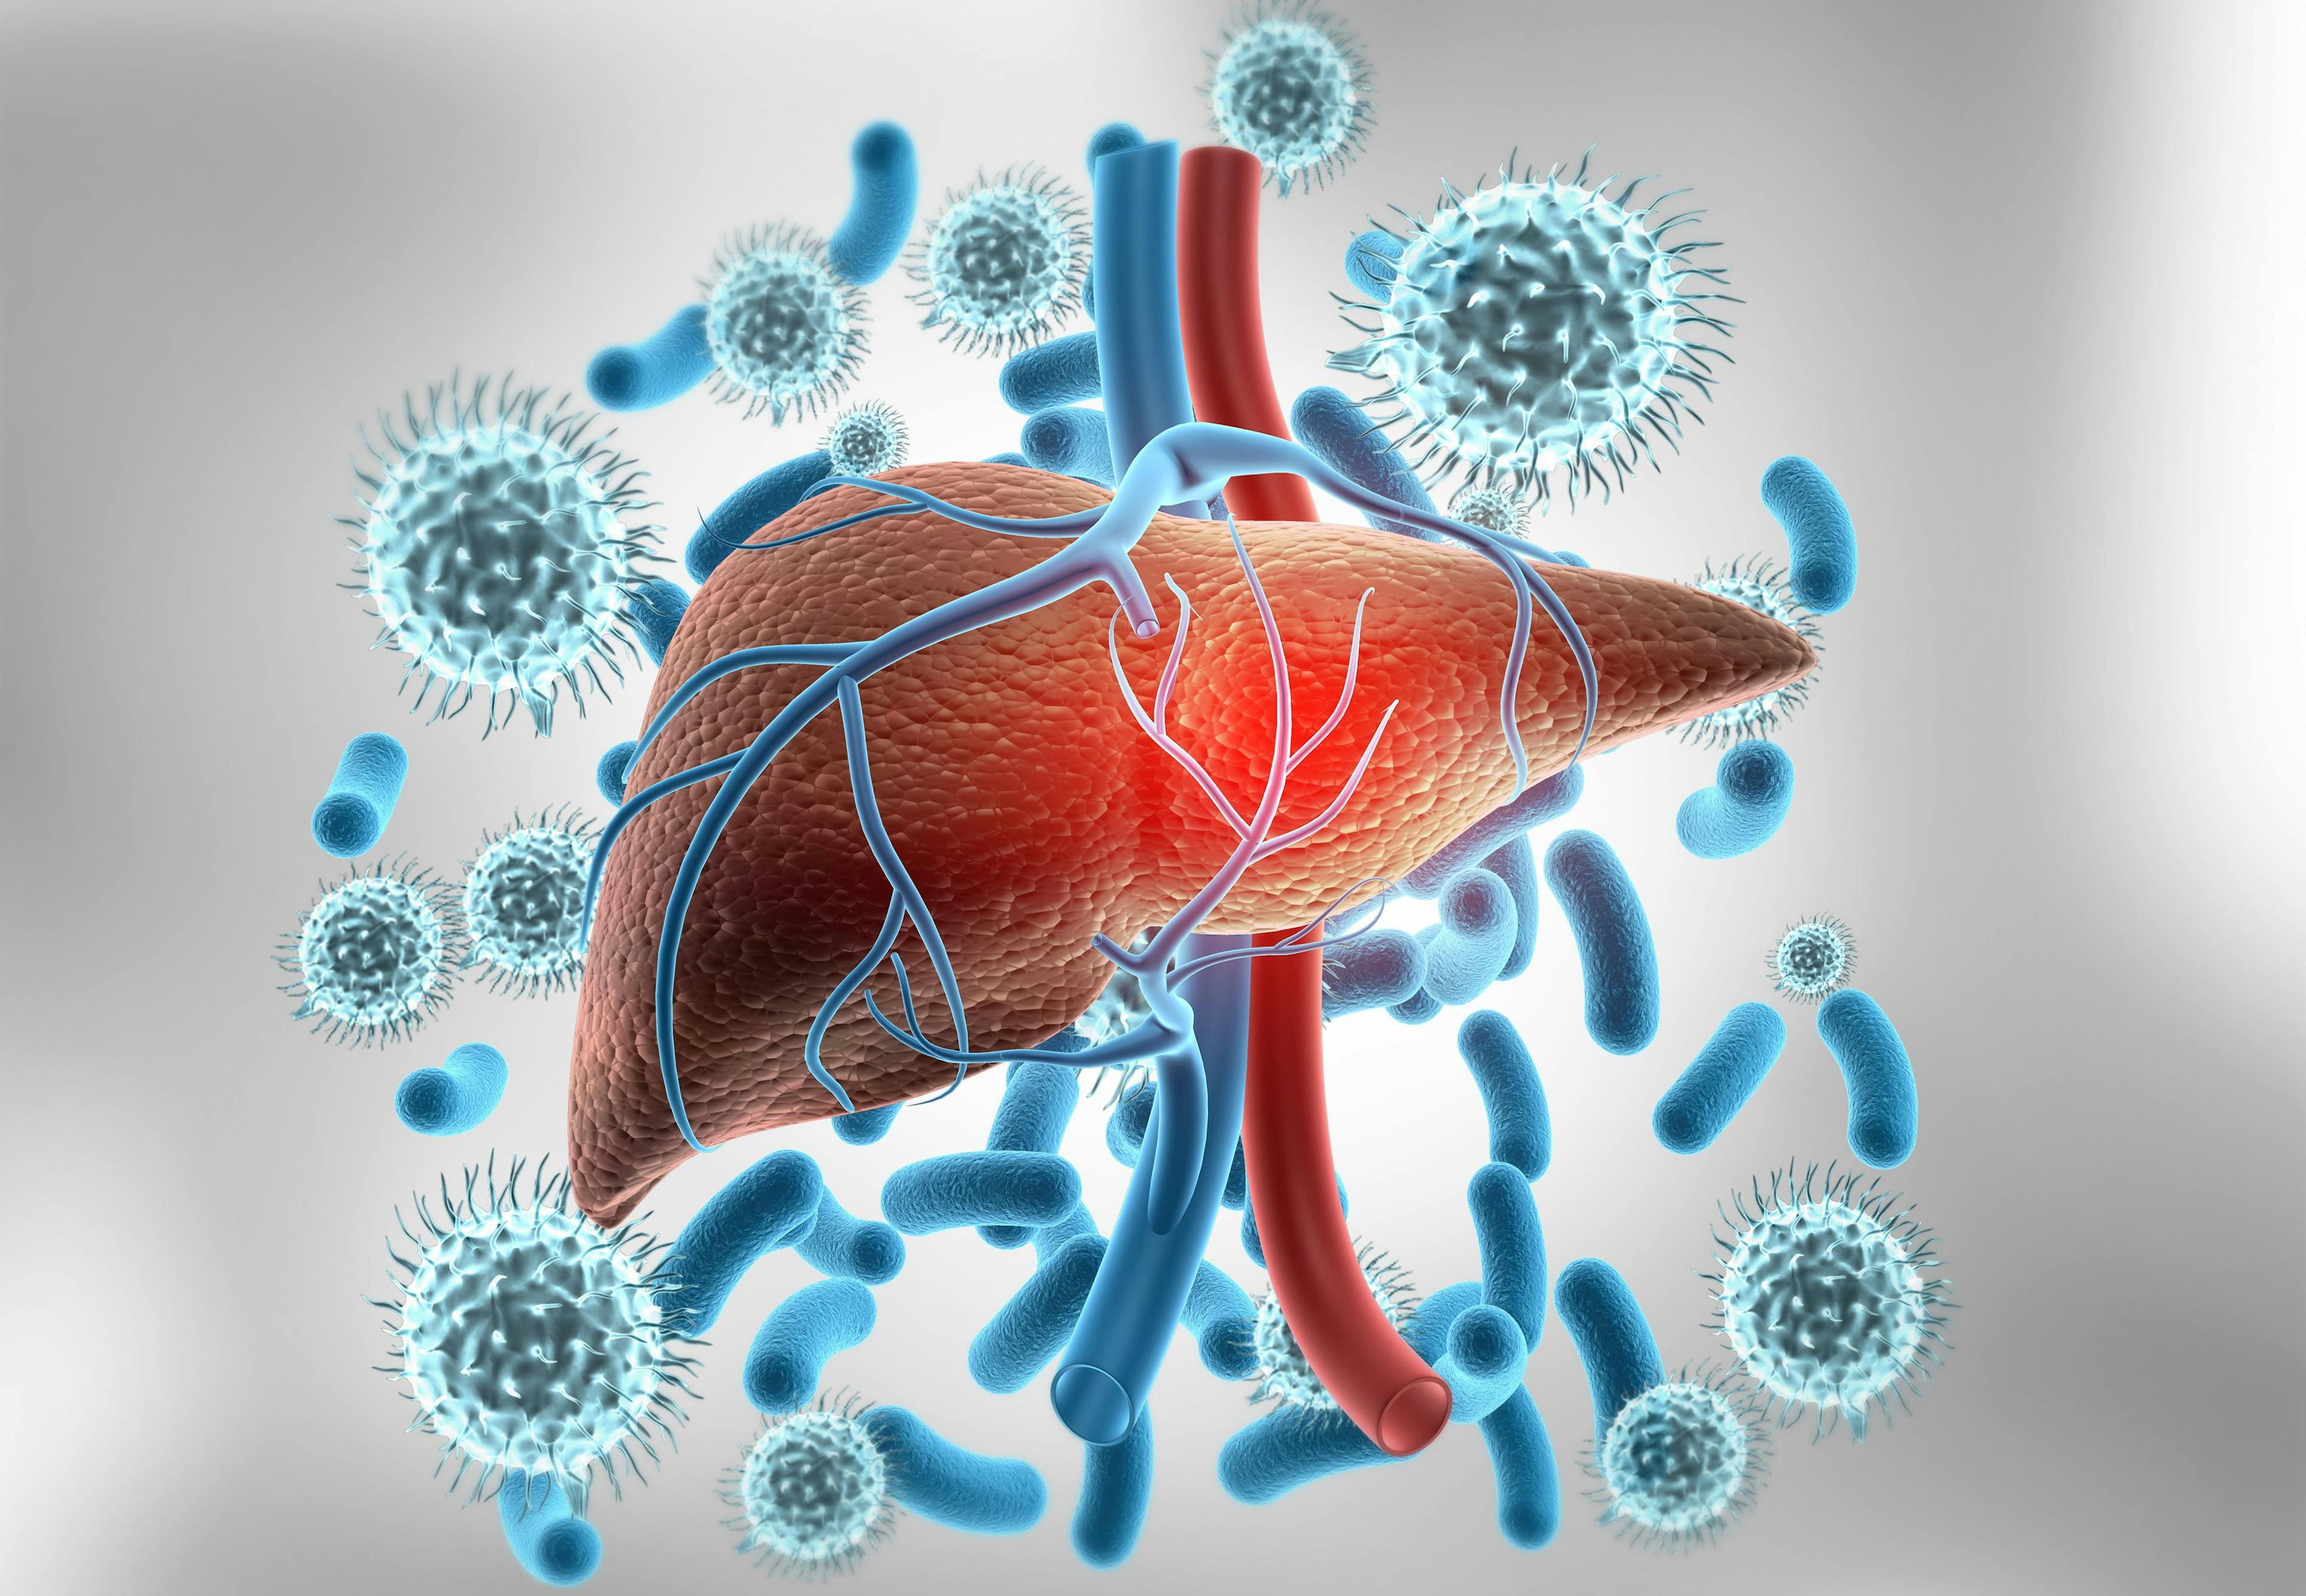 Human liver anatomy with hepatitis virus. 3d illustration | Image Credit: Rasi - stock.adobe.com